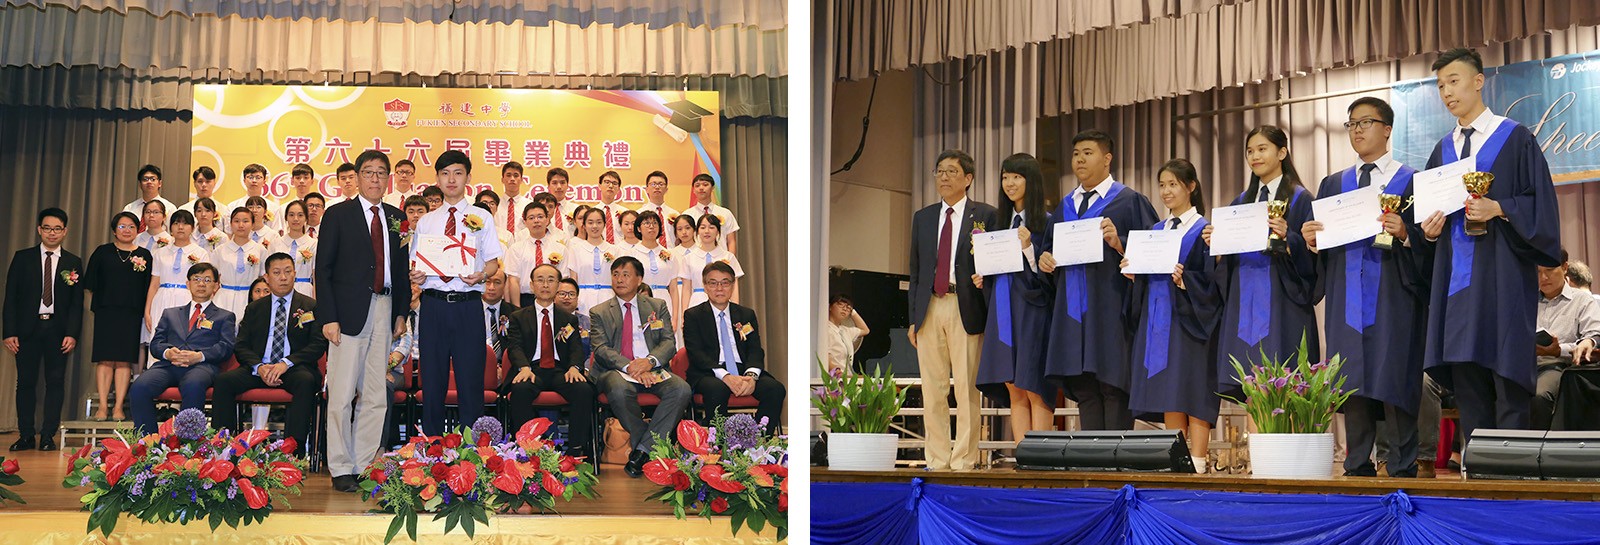 Professor Kuo presents certificates to graduates. 